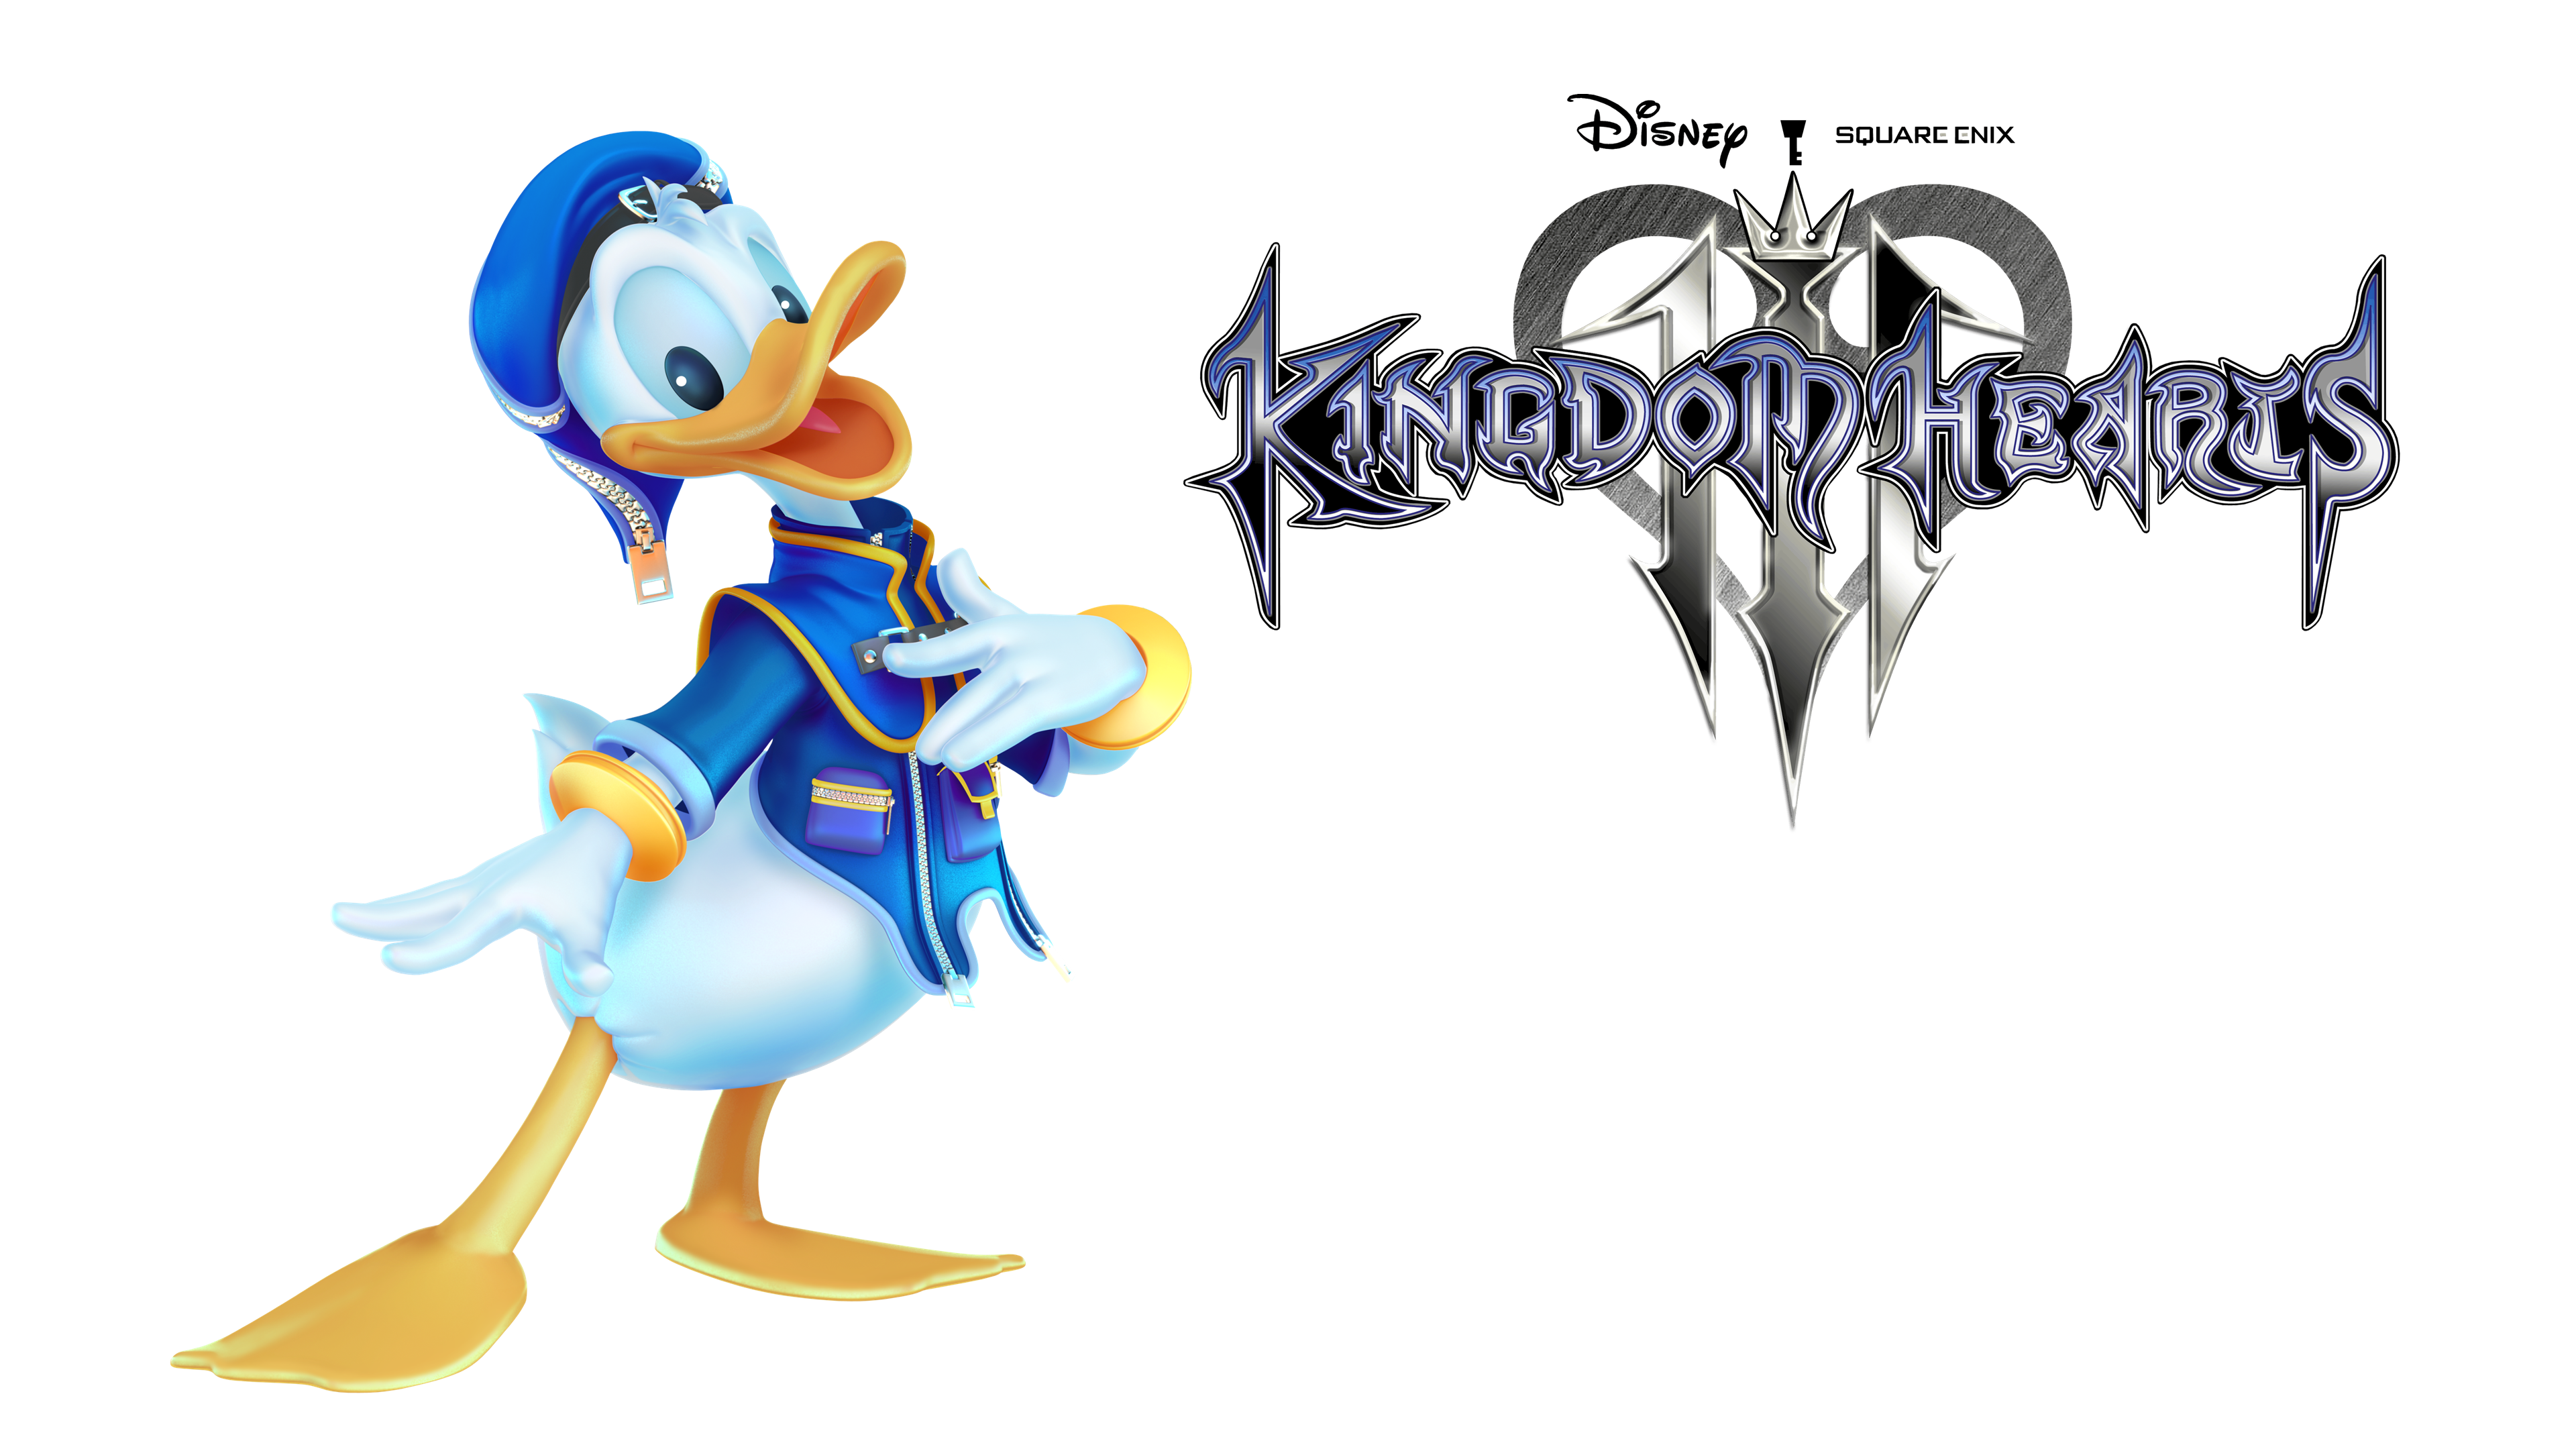 Kingdom Hearts III [Wallpaper] - Donald Duck by Caprice1996 on DeviantArt